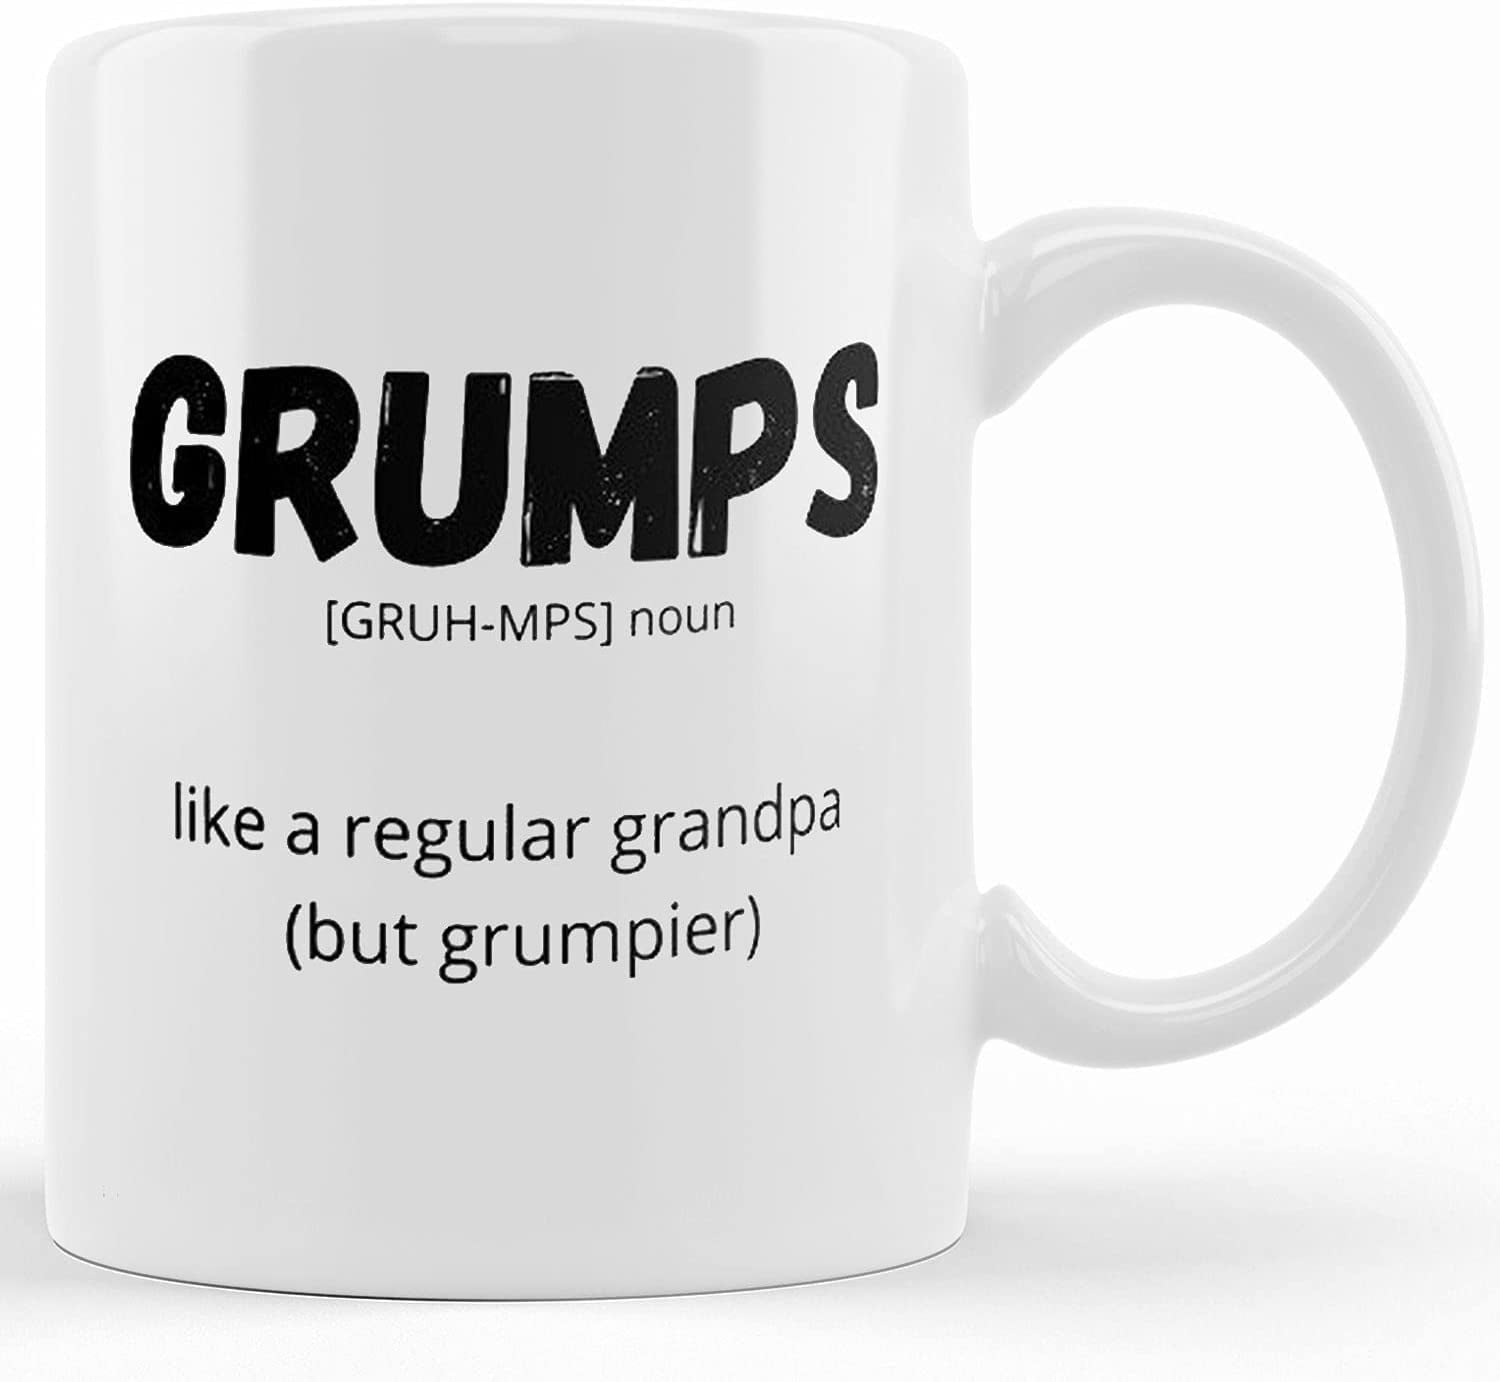 Papa A Fabulous Woman With Grandchildren - Coffee Mug - Funny Papa Gift  - Papa Mug